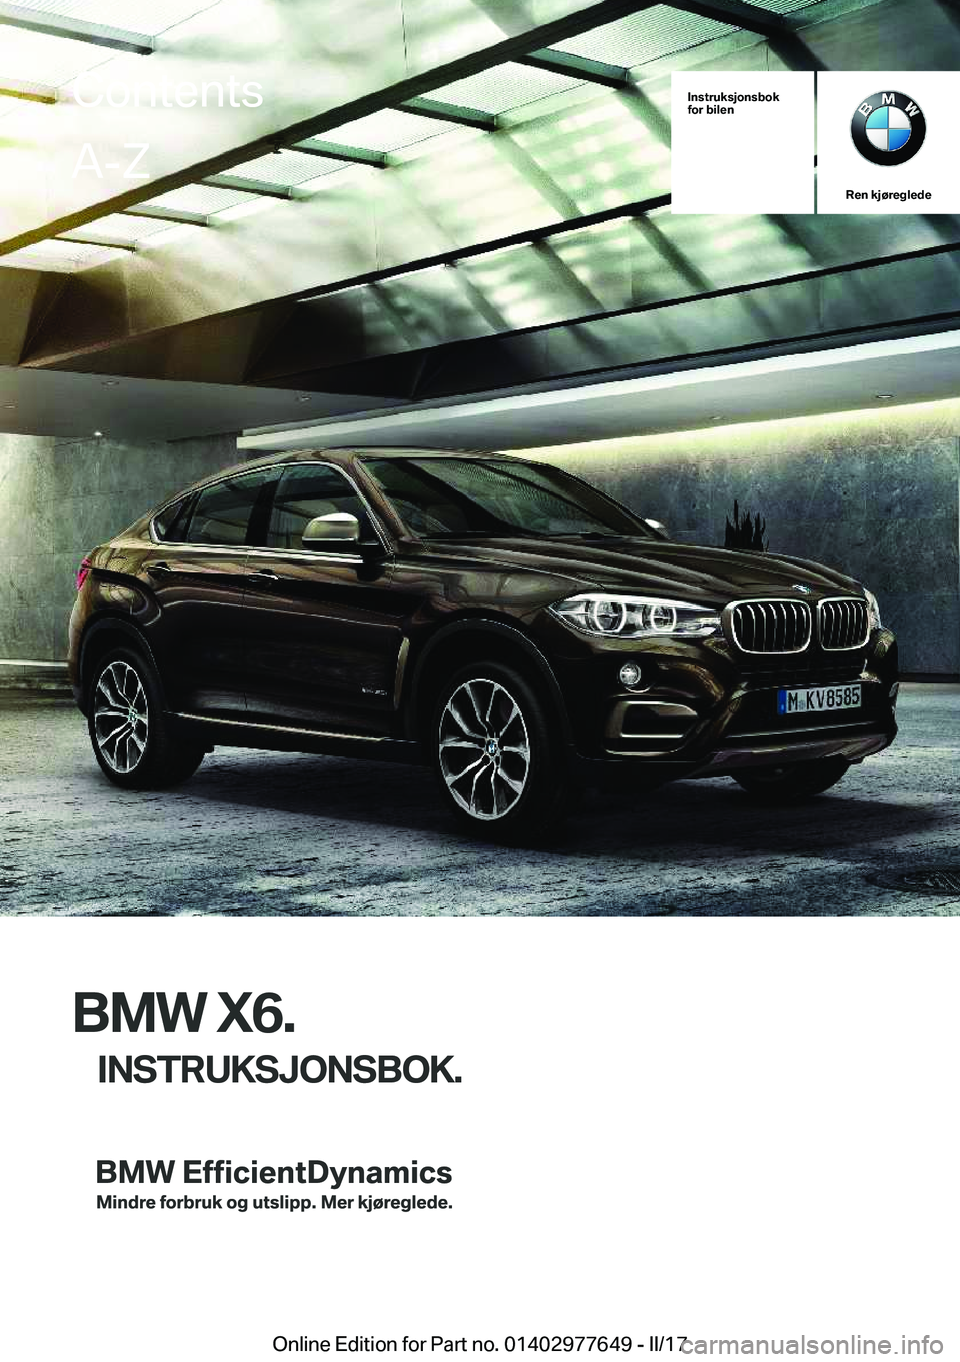 BMW X6 2017  InstruksjonsbØker (in Norwegian) �I�n�s�t�r�u�k�s�j�o�n�s�b�o�k
�f�o�r��b�i�l�e�n
�R�e�n��k�j�